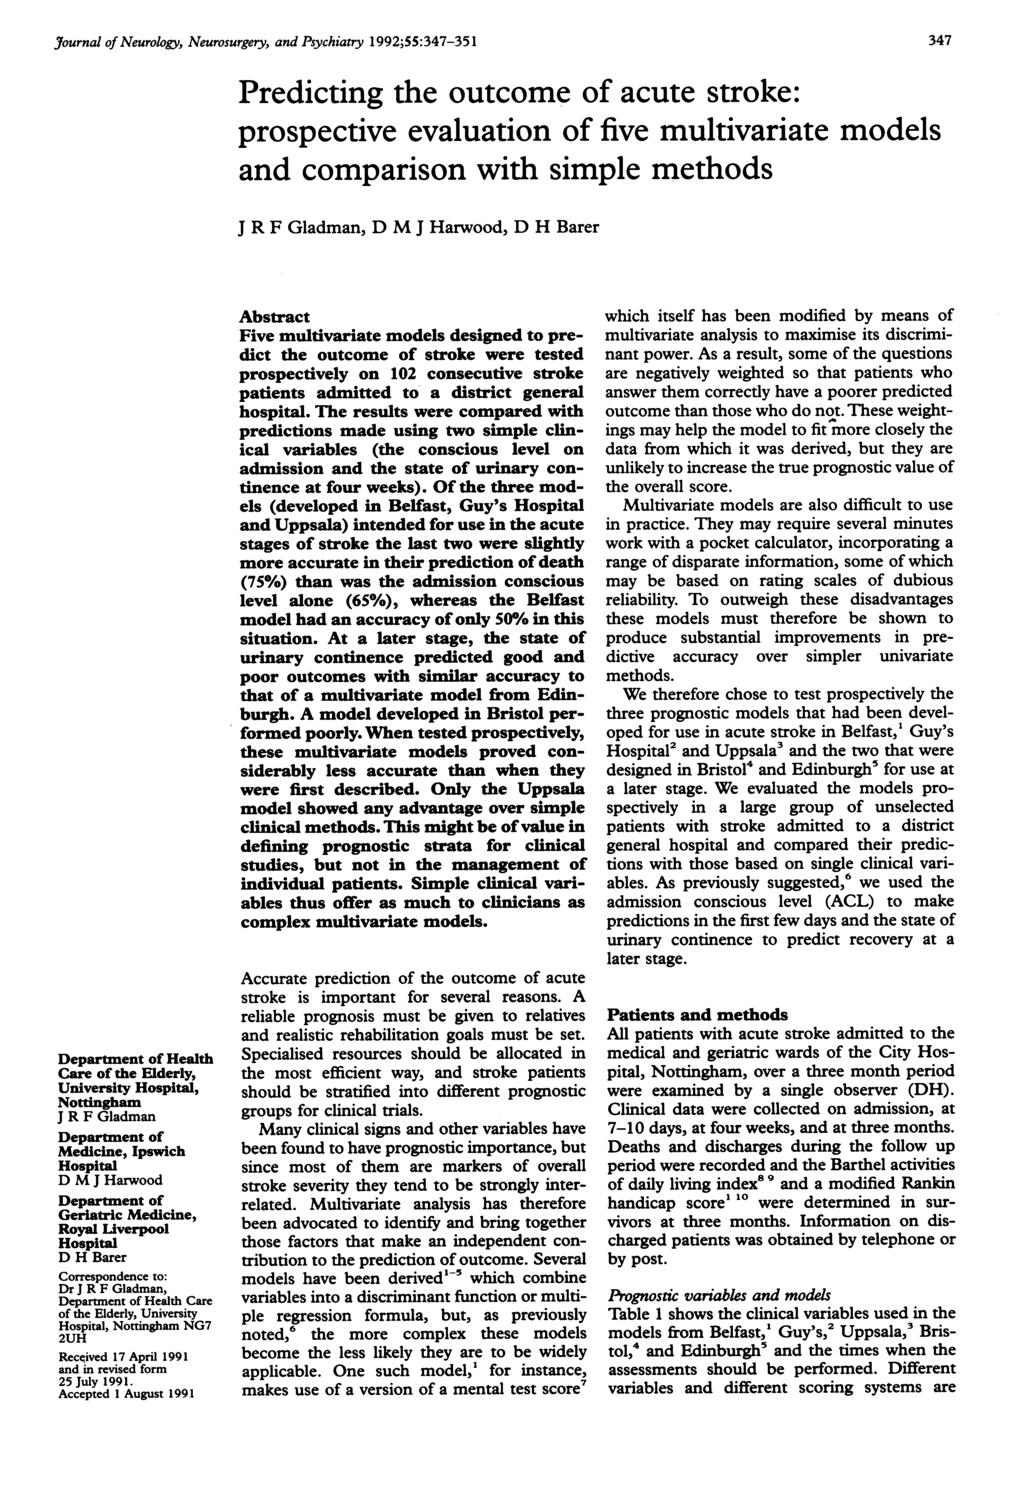 Journal of Neurology, Neurosurgery, and Psychiatry 1992;55:347-351 Department of Health Care of the Elderly, University Hospital, Nottingham J R F Gladman Department of Medicine, Ipswich Hospital D M